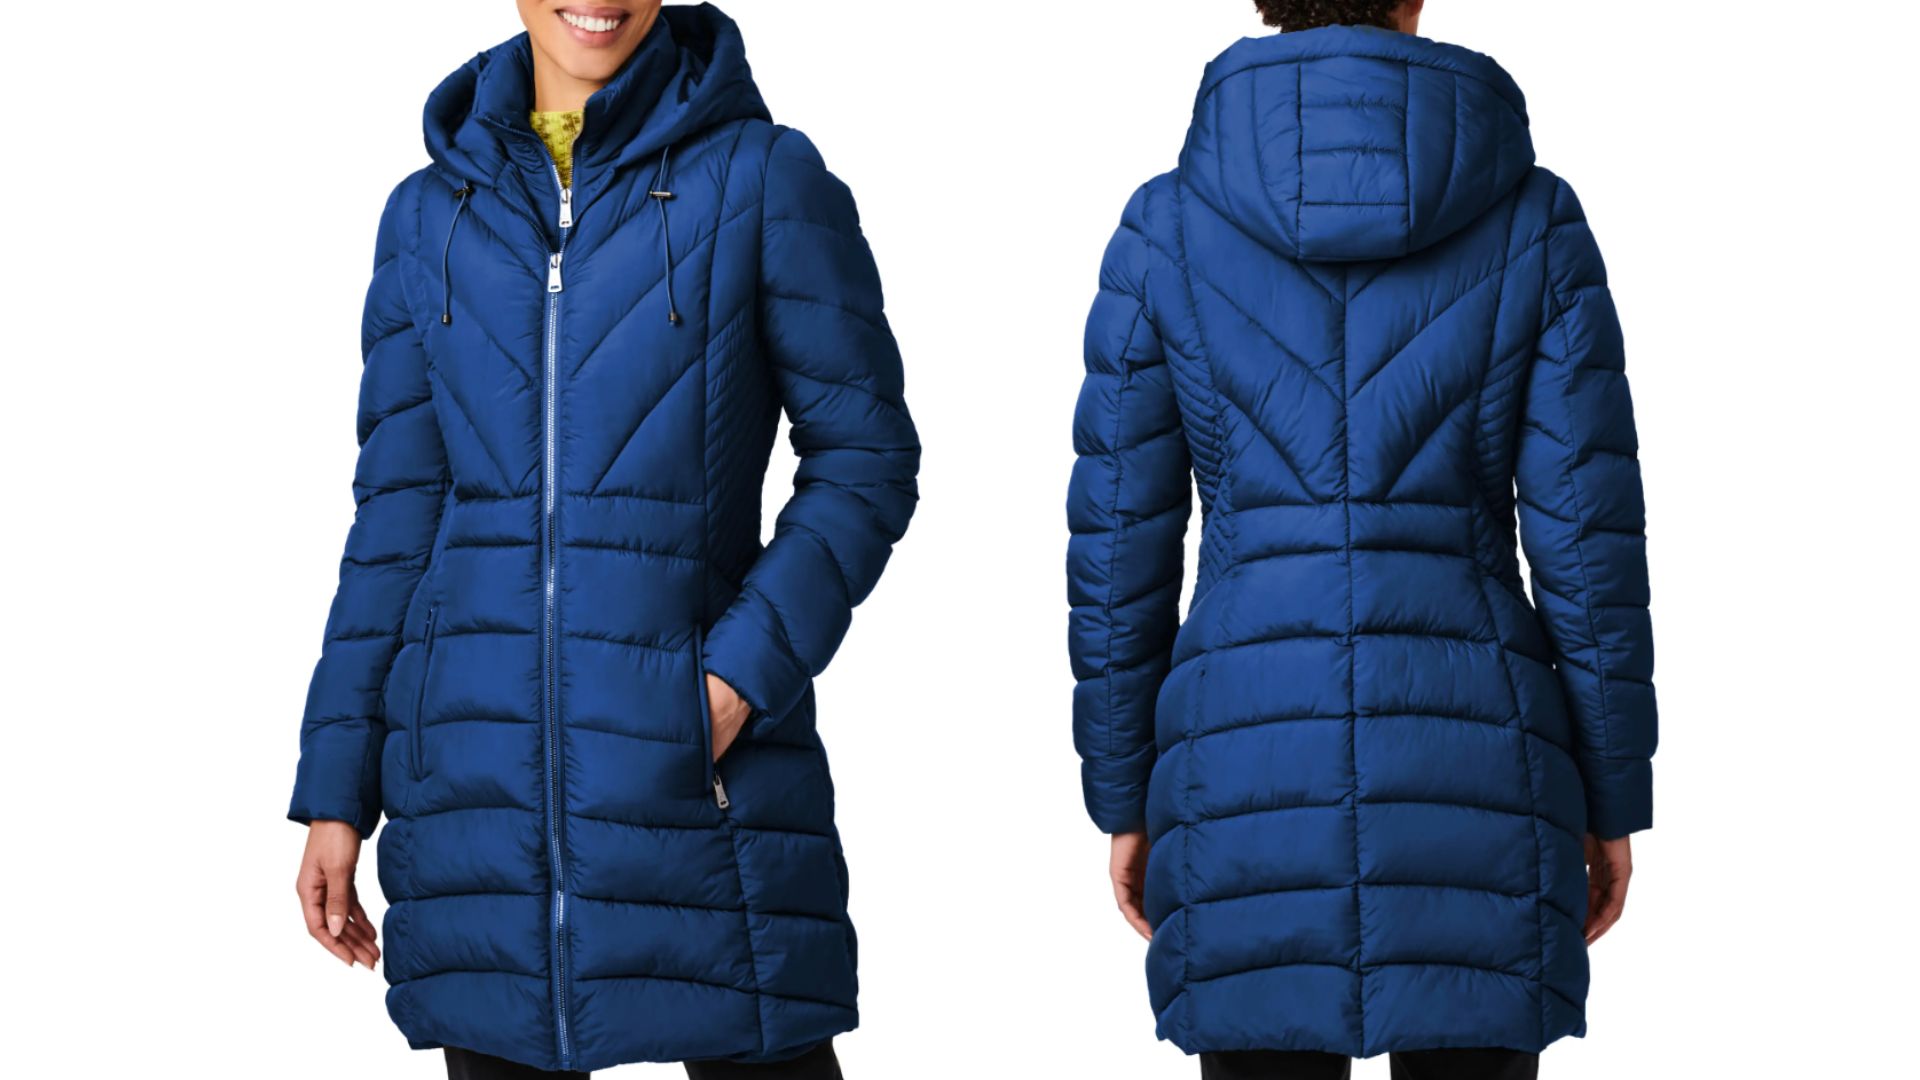 Best Winter Coats For Women